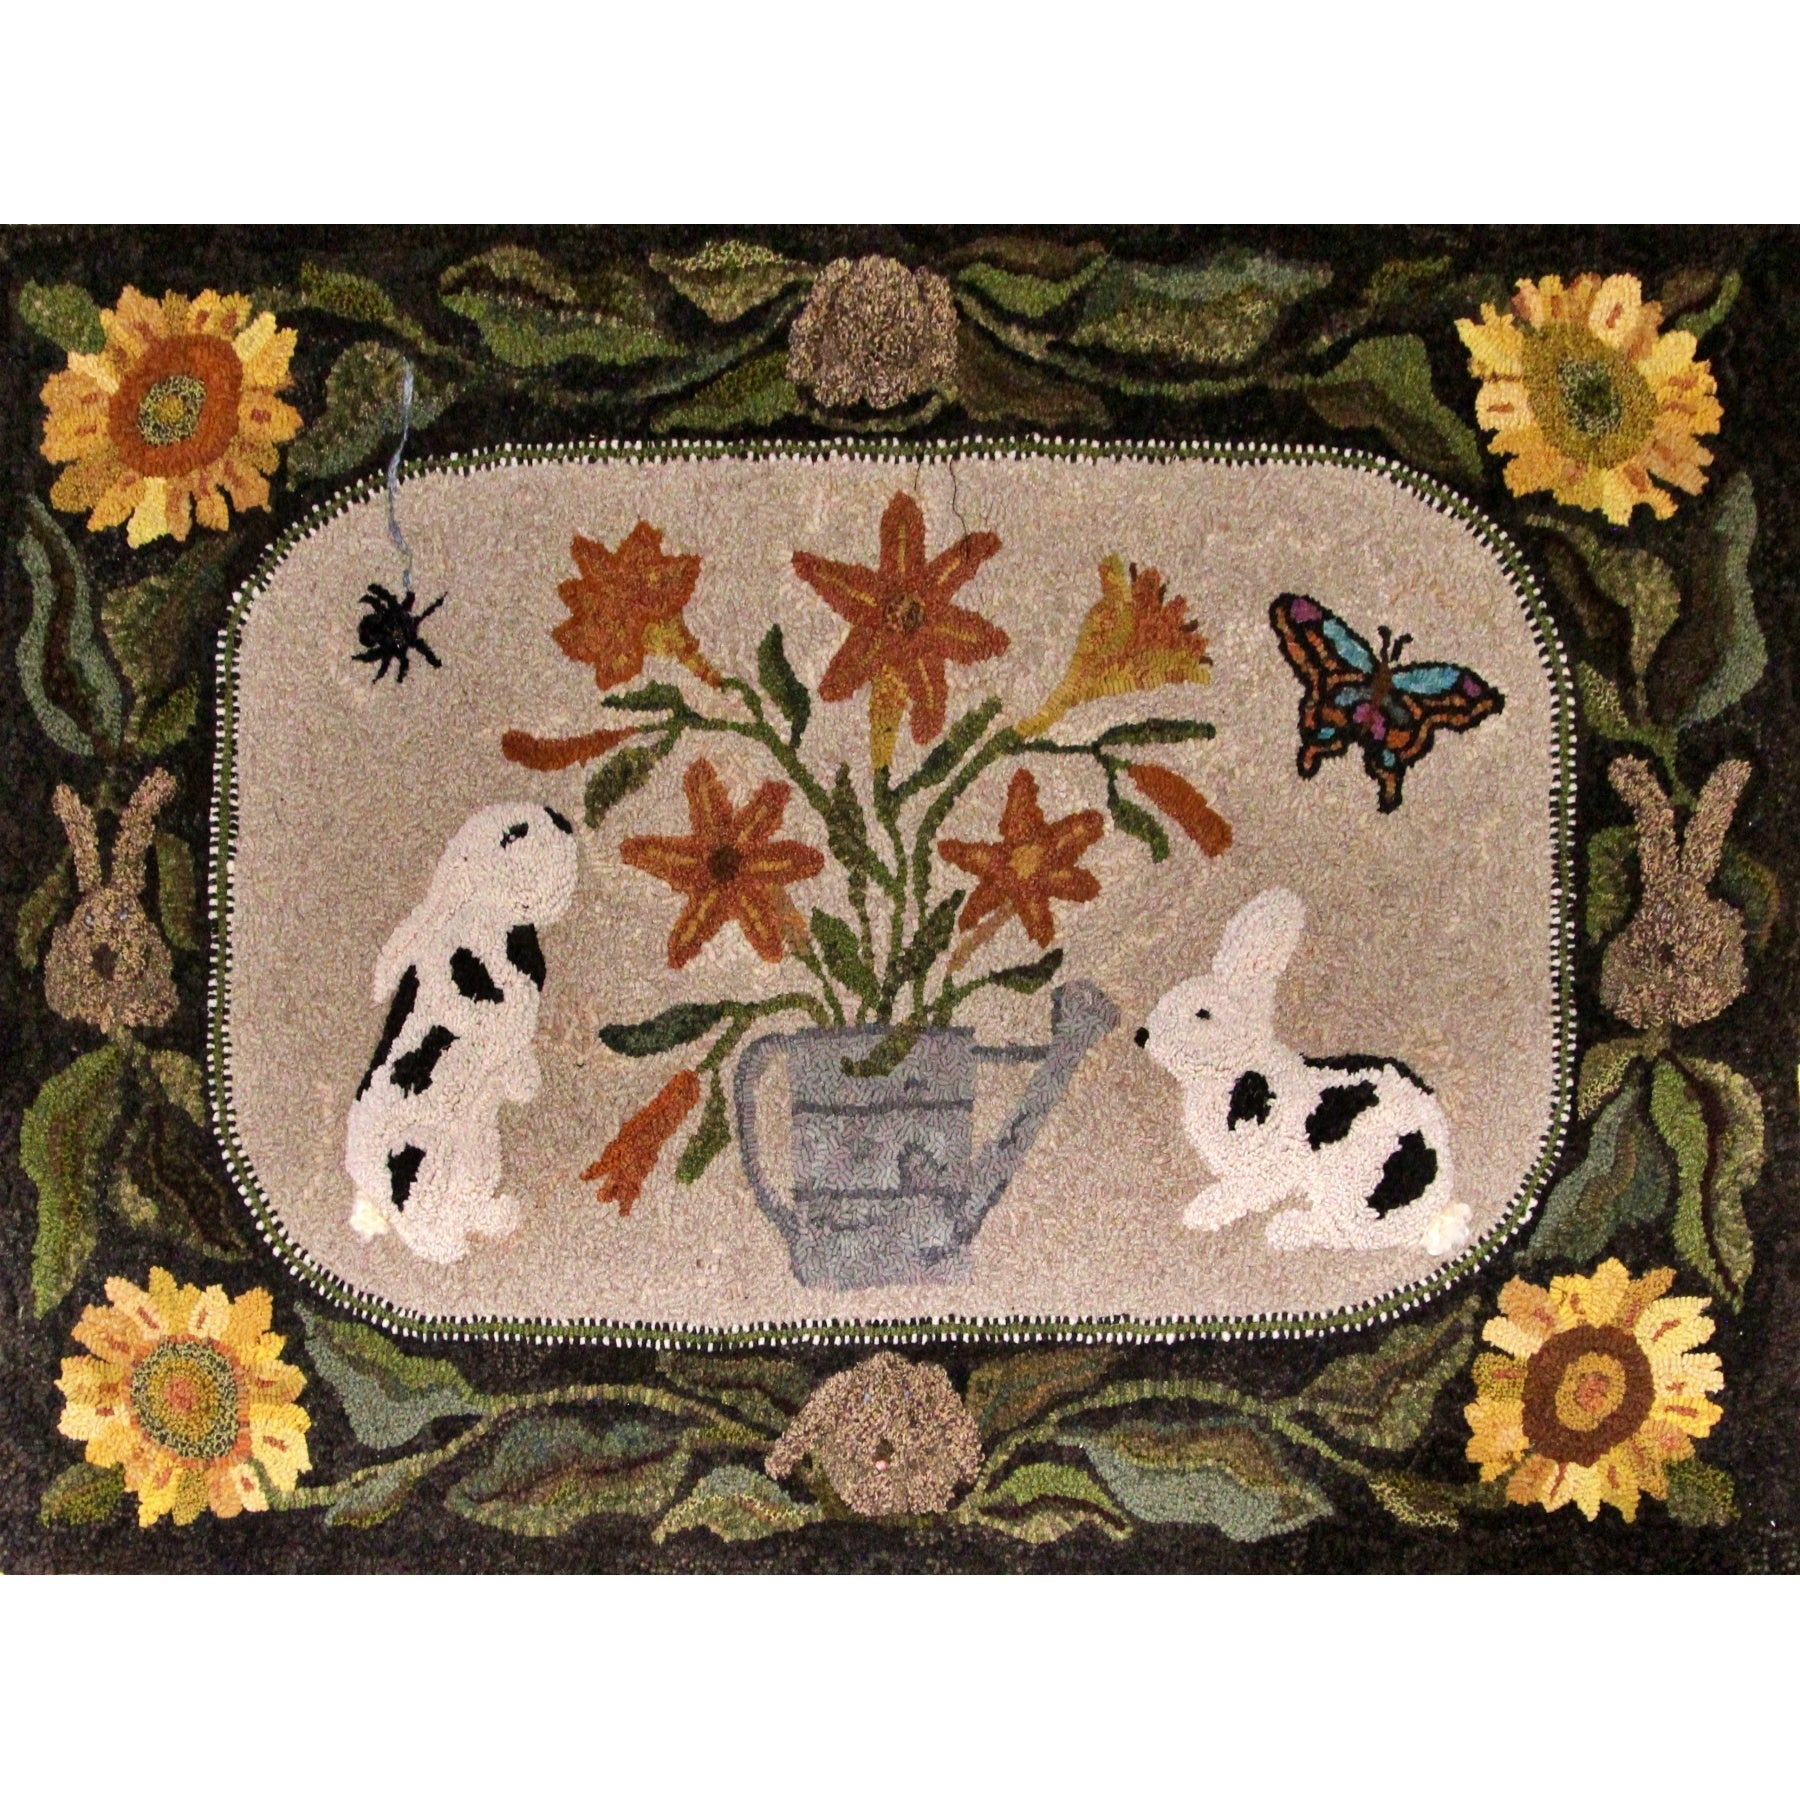 Rabbits & Lilies, rug hooked by Deb Burcin